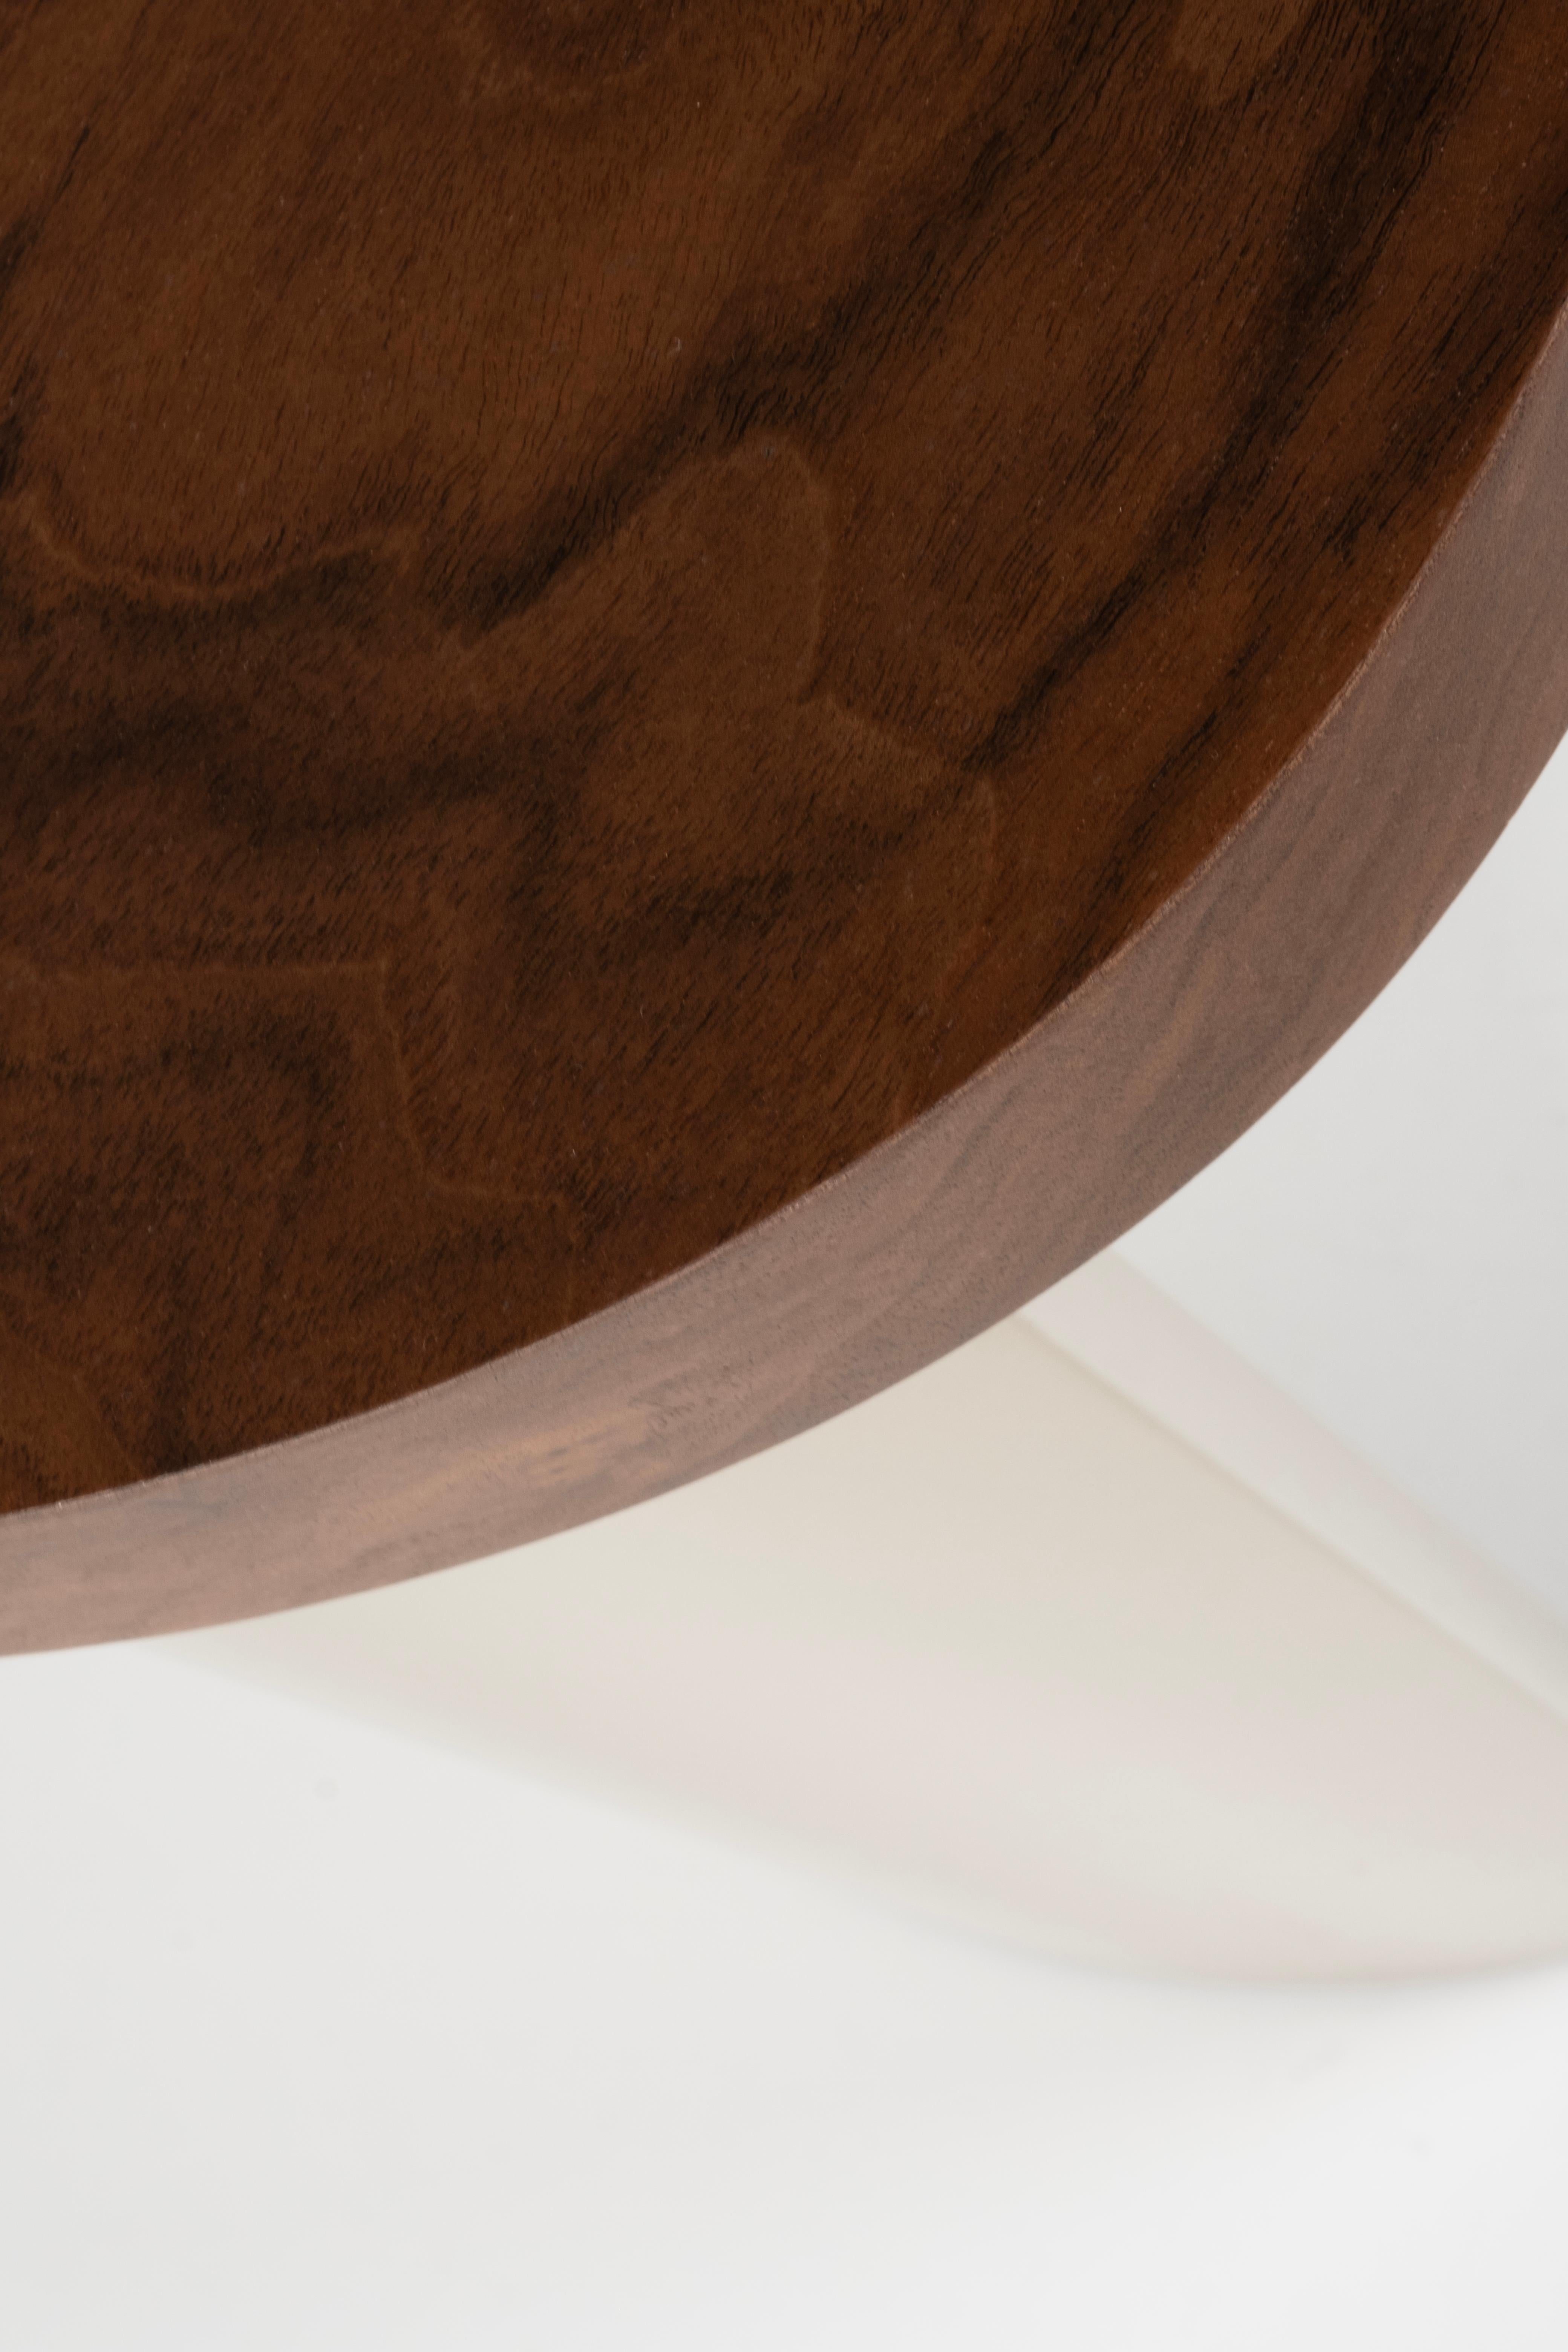 Contemporary Organic Modern Armona Desk, Walnut, Handmade in Portugal by Greenapple For Sale